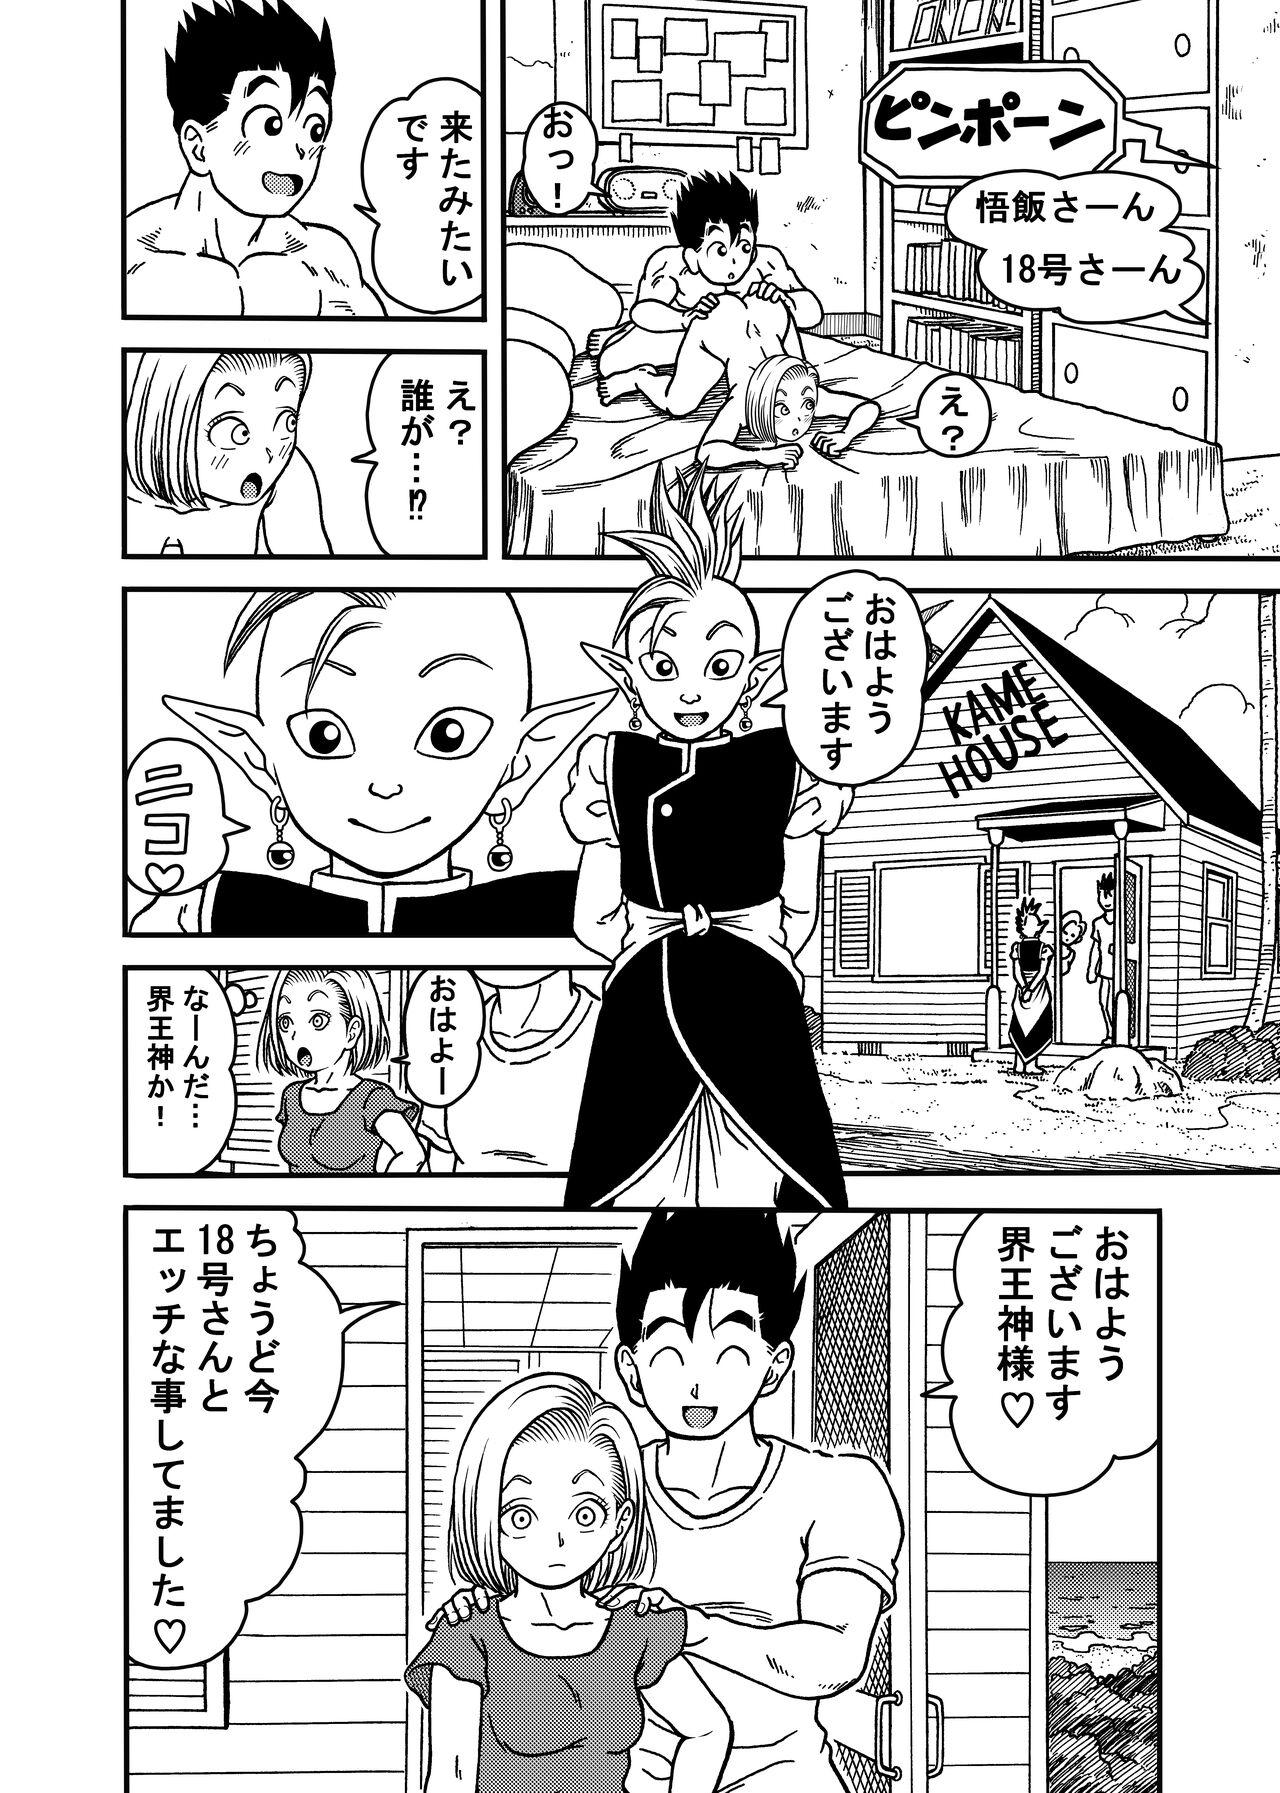 Tiny 18-gou NTR Nakadashi on Parade 5 - Dragon ball z Class - Page 8